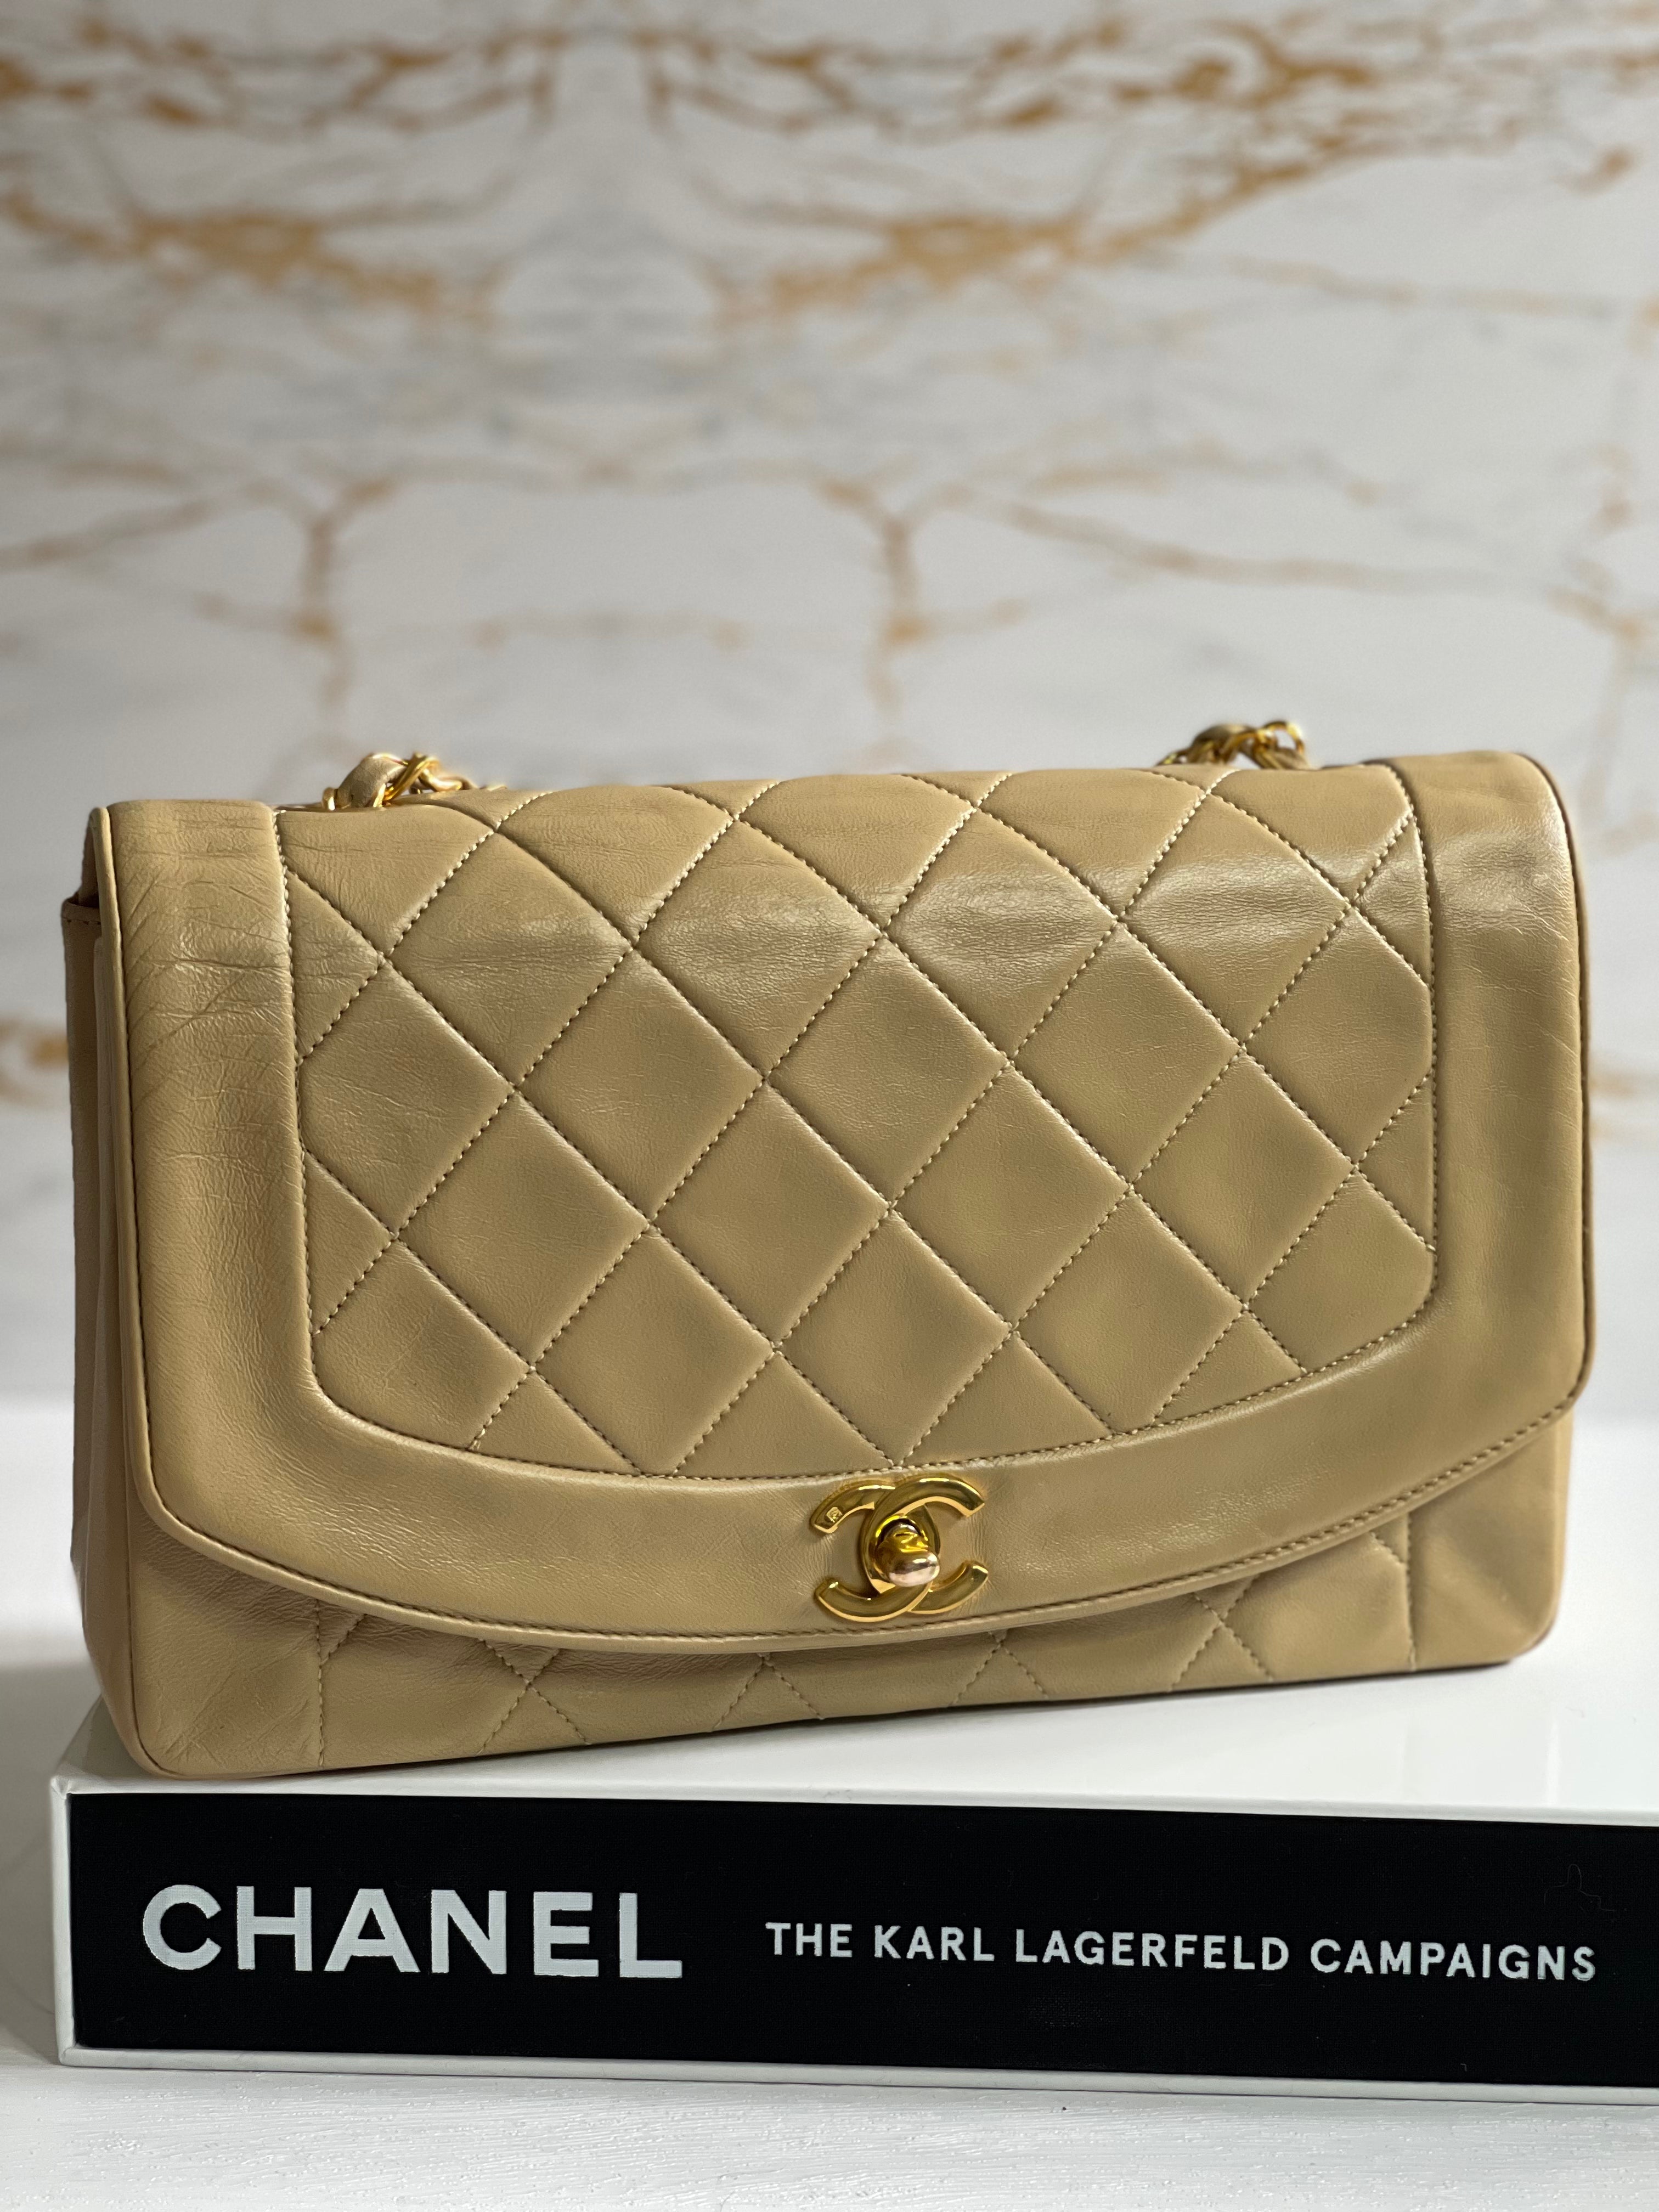 Chanel Diana Flap bag size Medium in Milk Tea Beige Lambskin